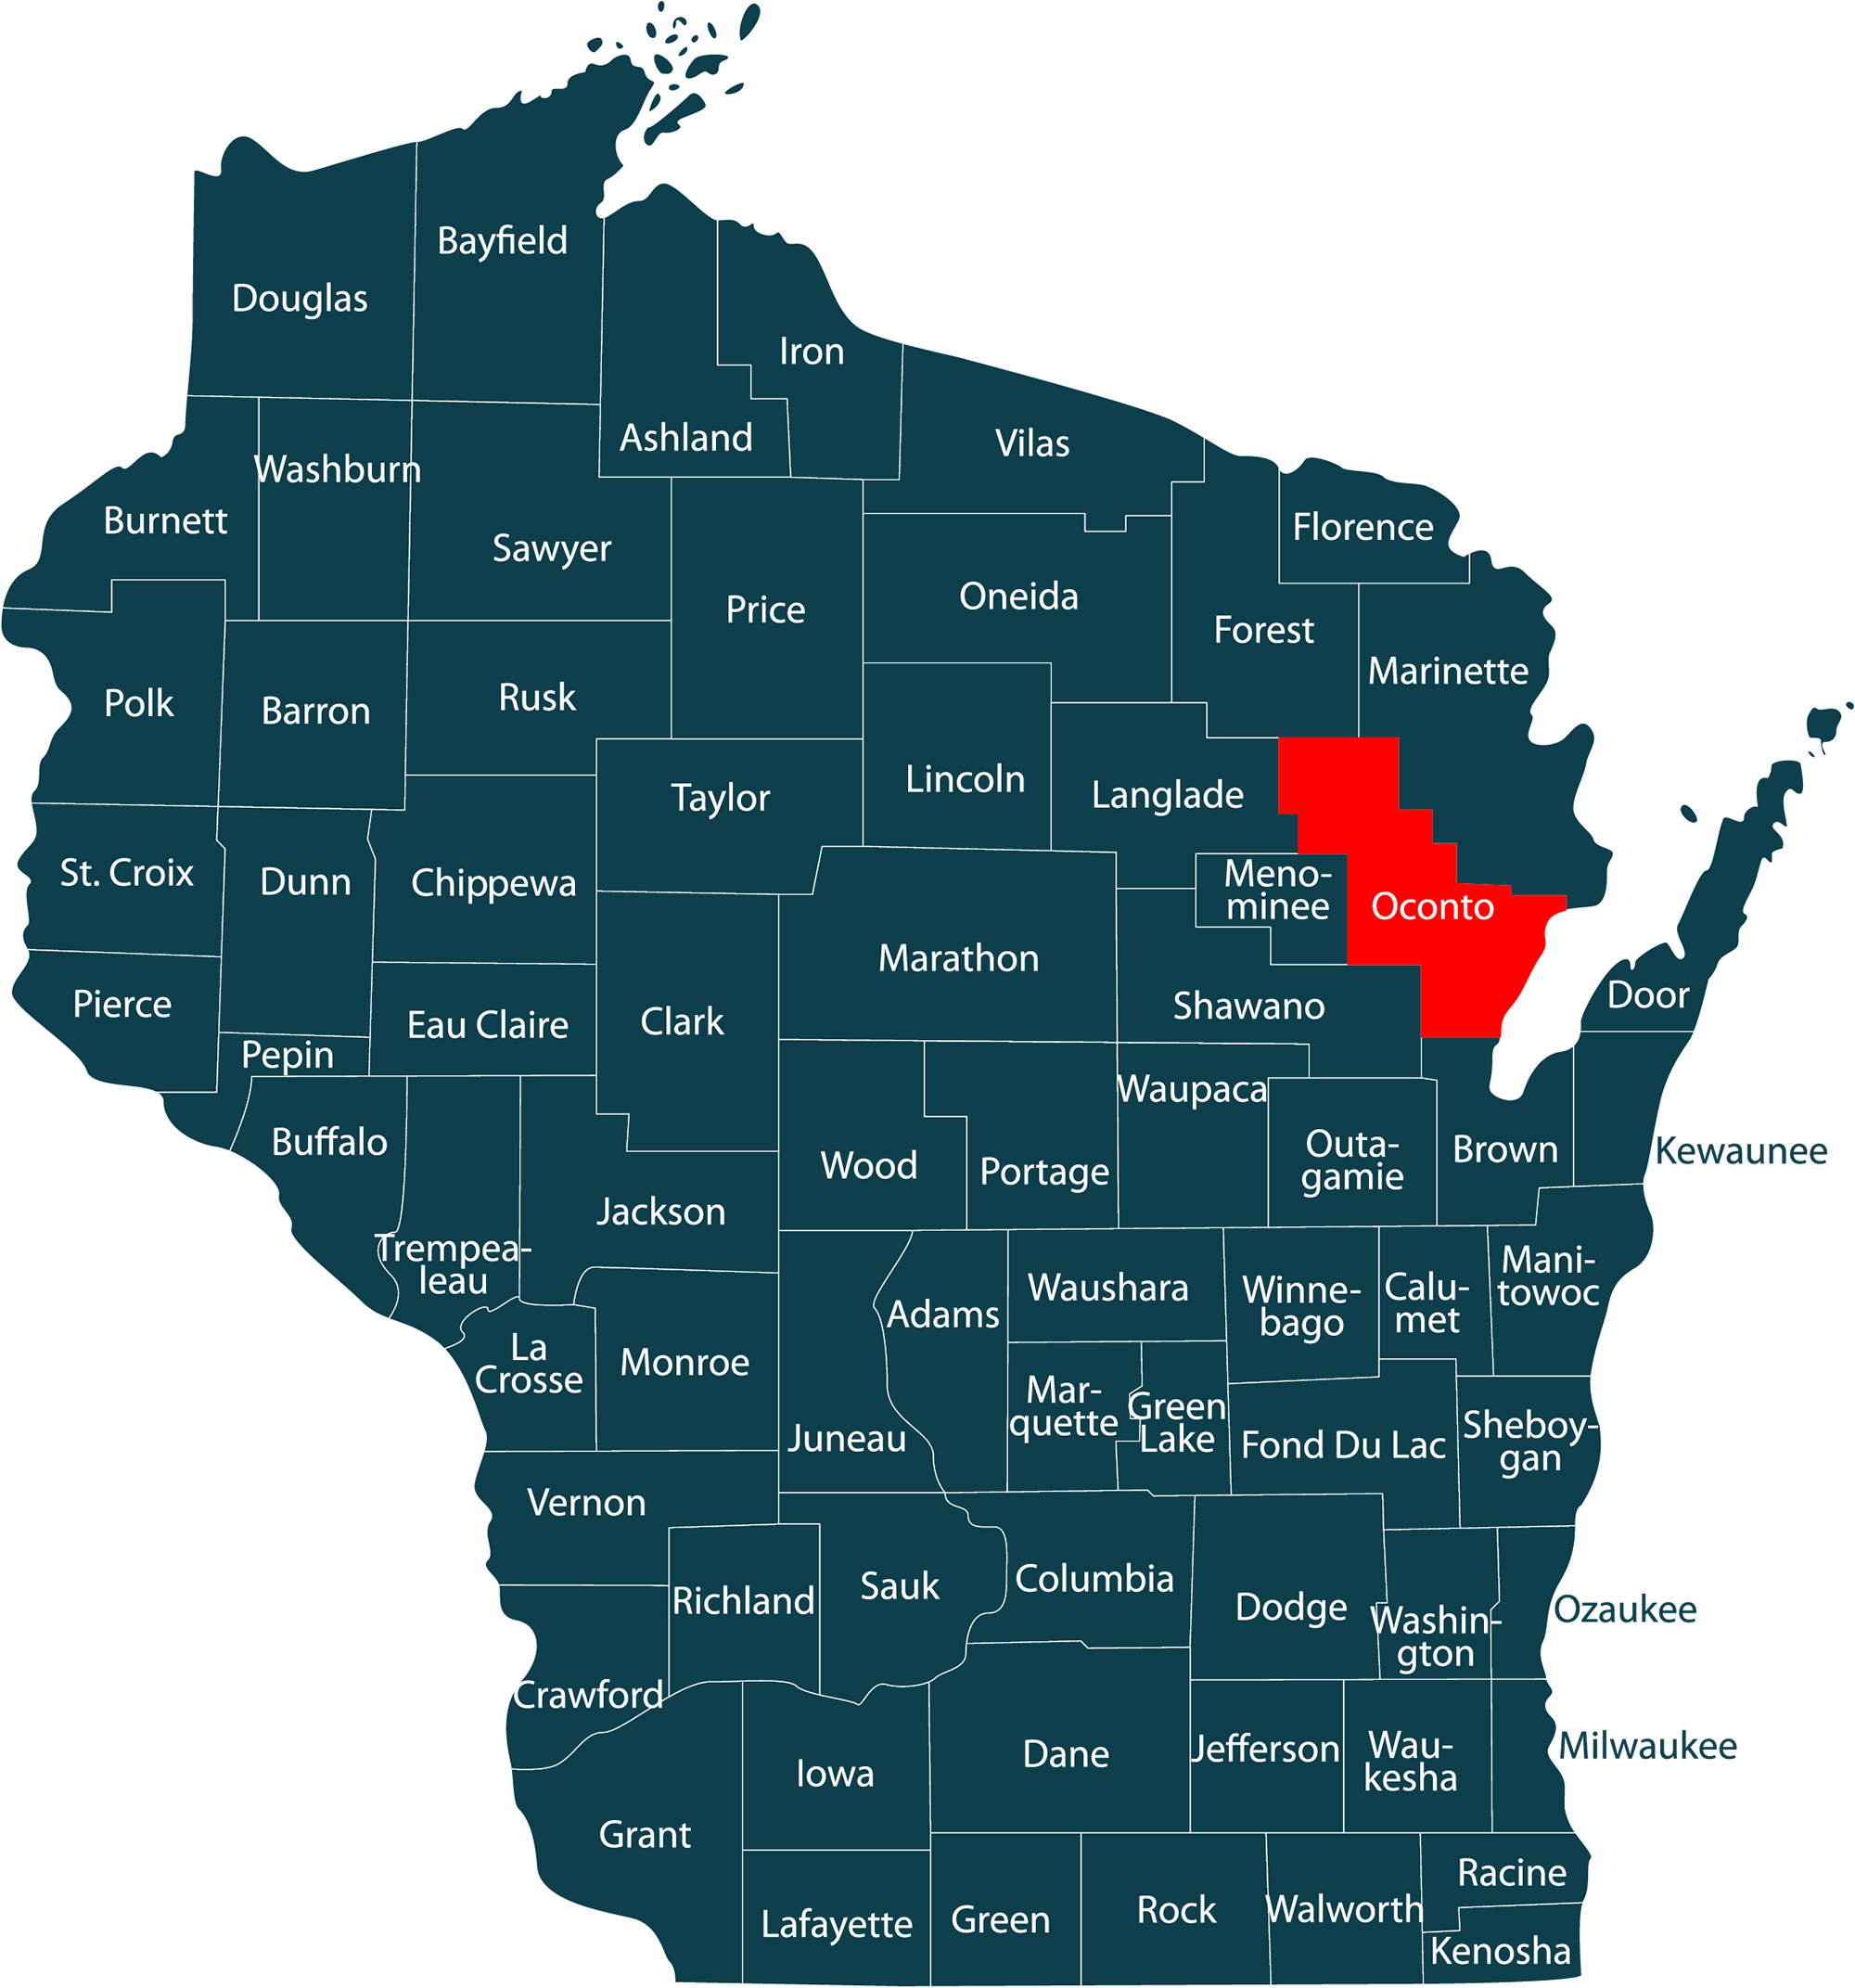 Oconto County Wisconsin @ wisconsin.com